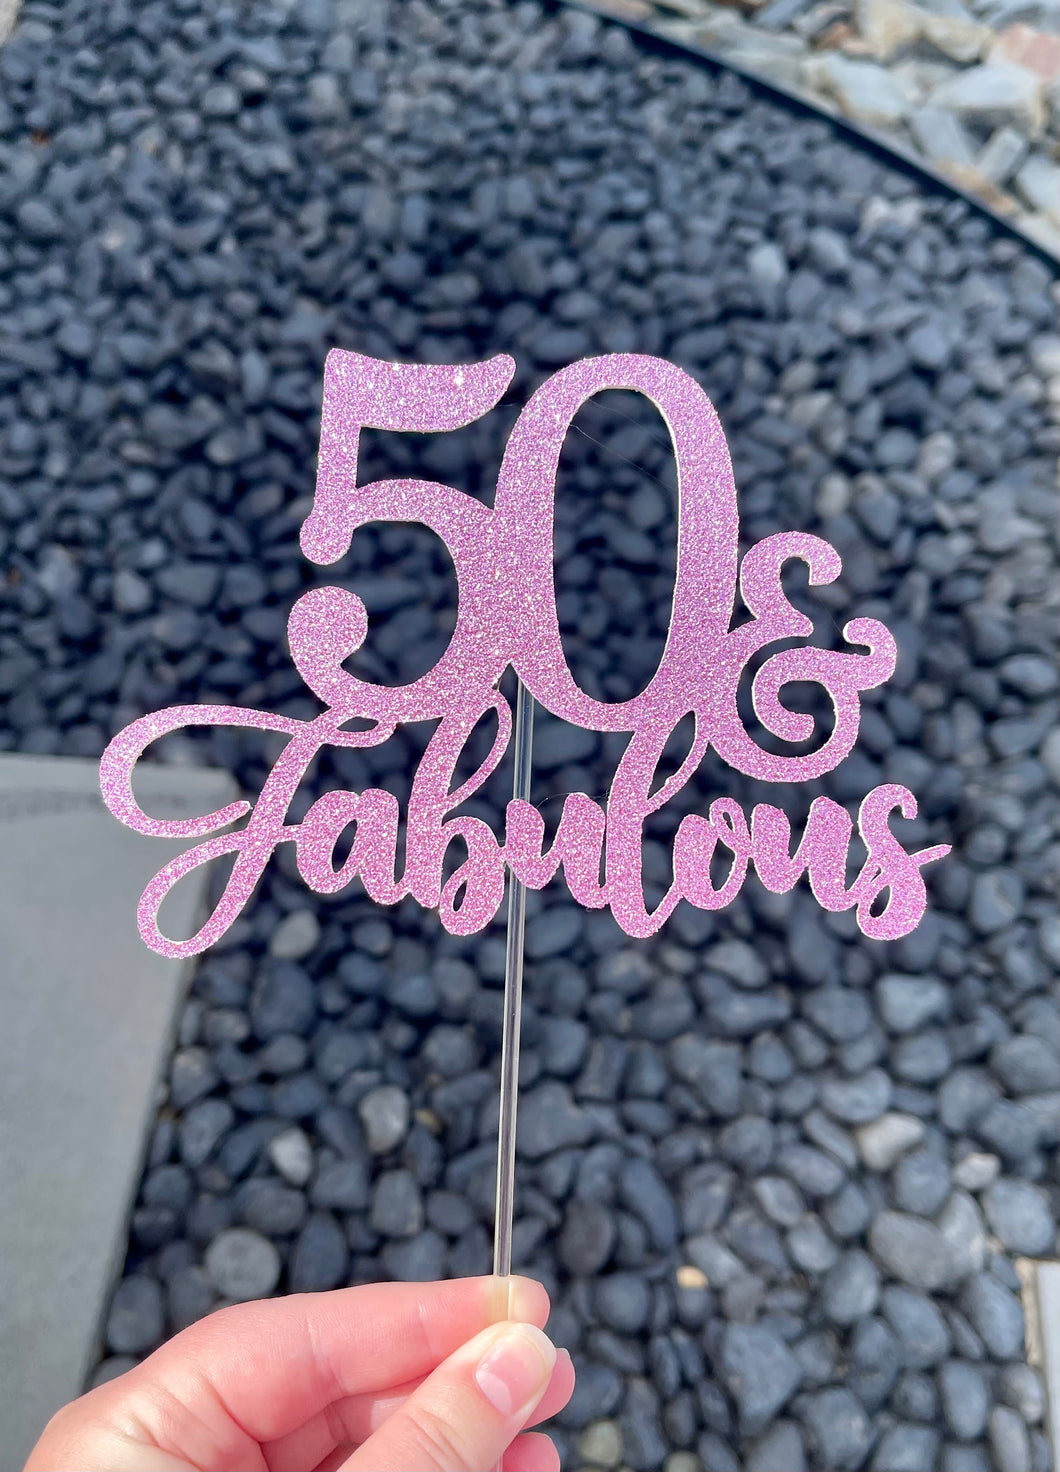 50 & Fabulous Cake Topper